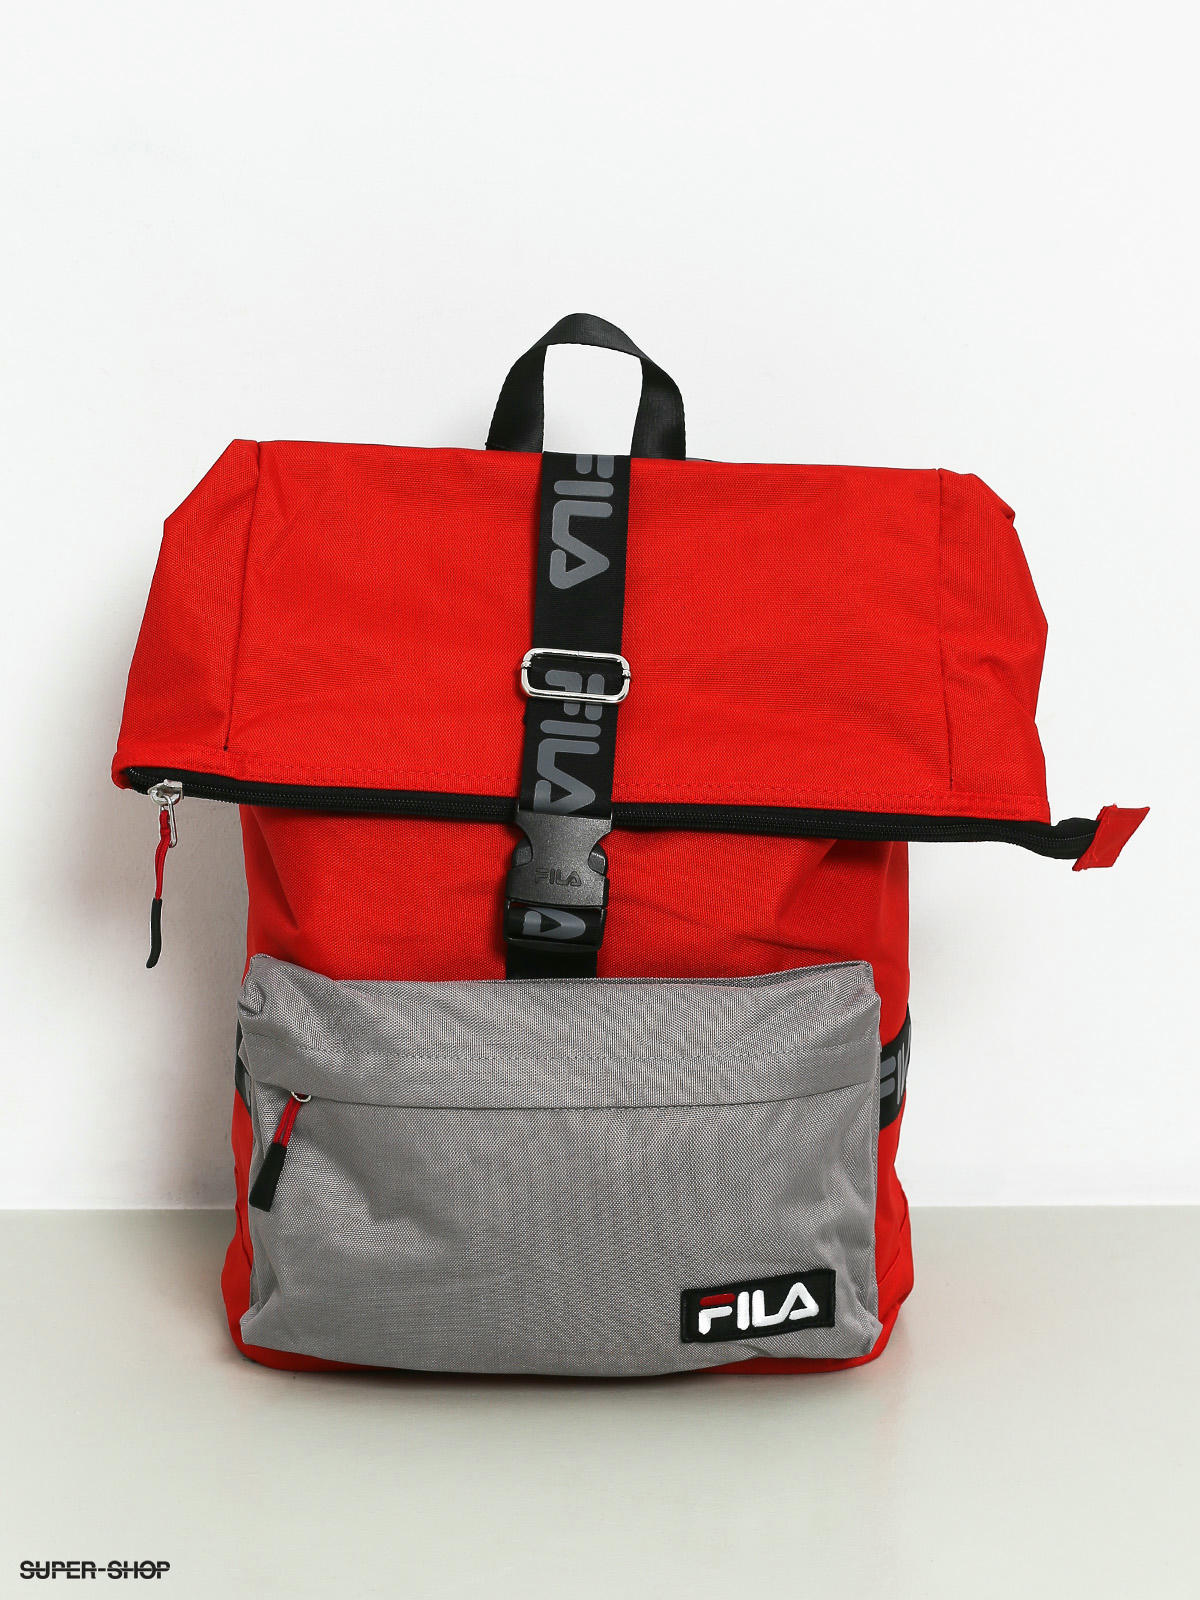 Fila Backpack red/black)